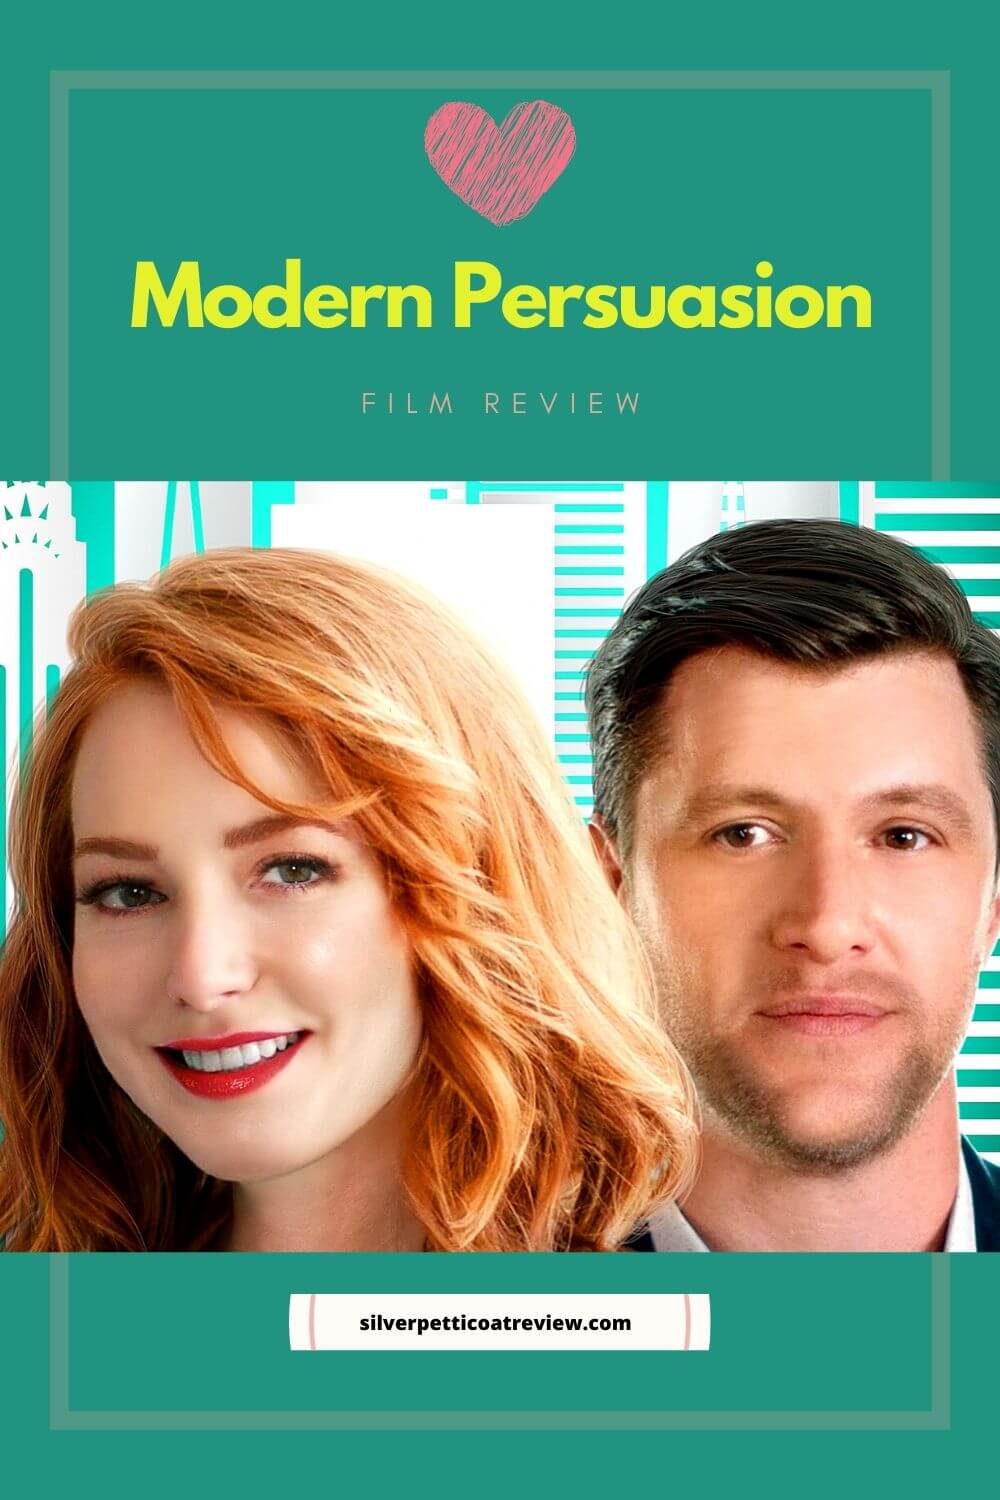 Modern Persuasion film review - pinterest image